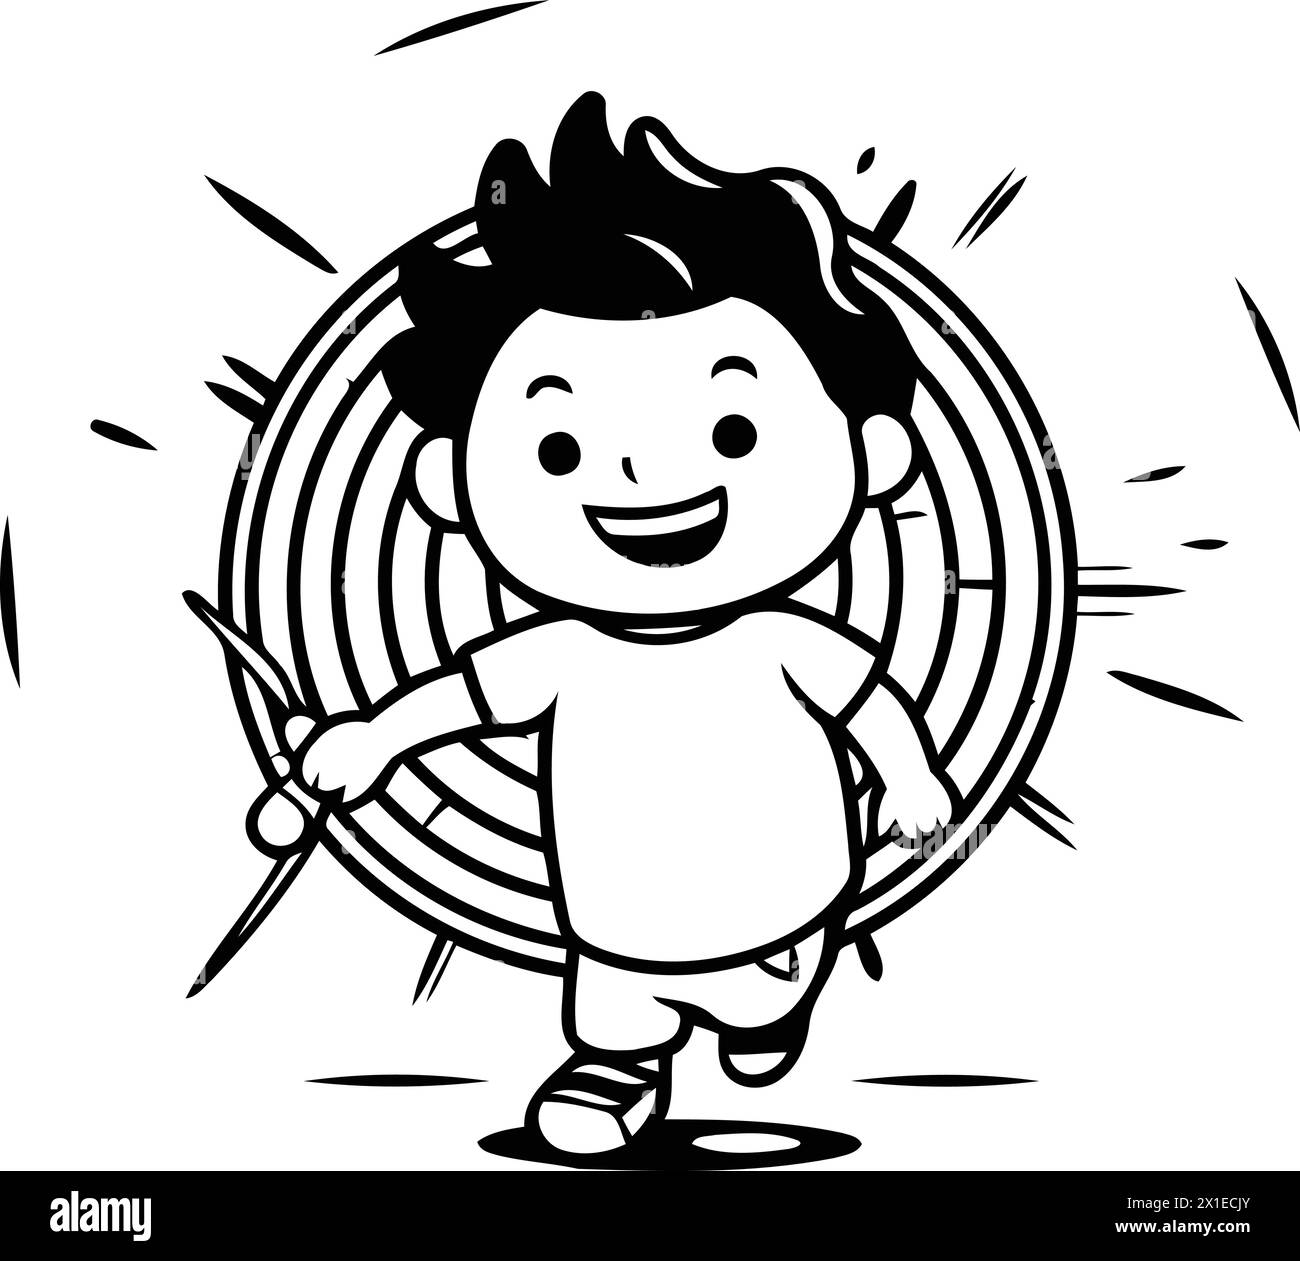 Cartoon boy with radiation symbol in his hand. Vector illustration. Stock Vector